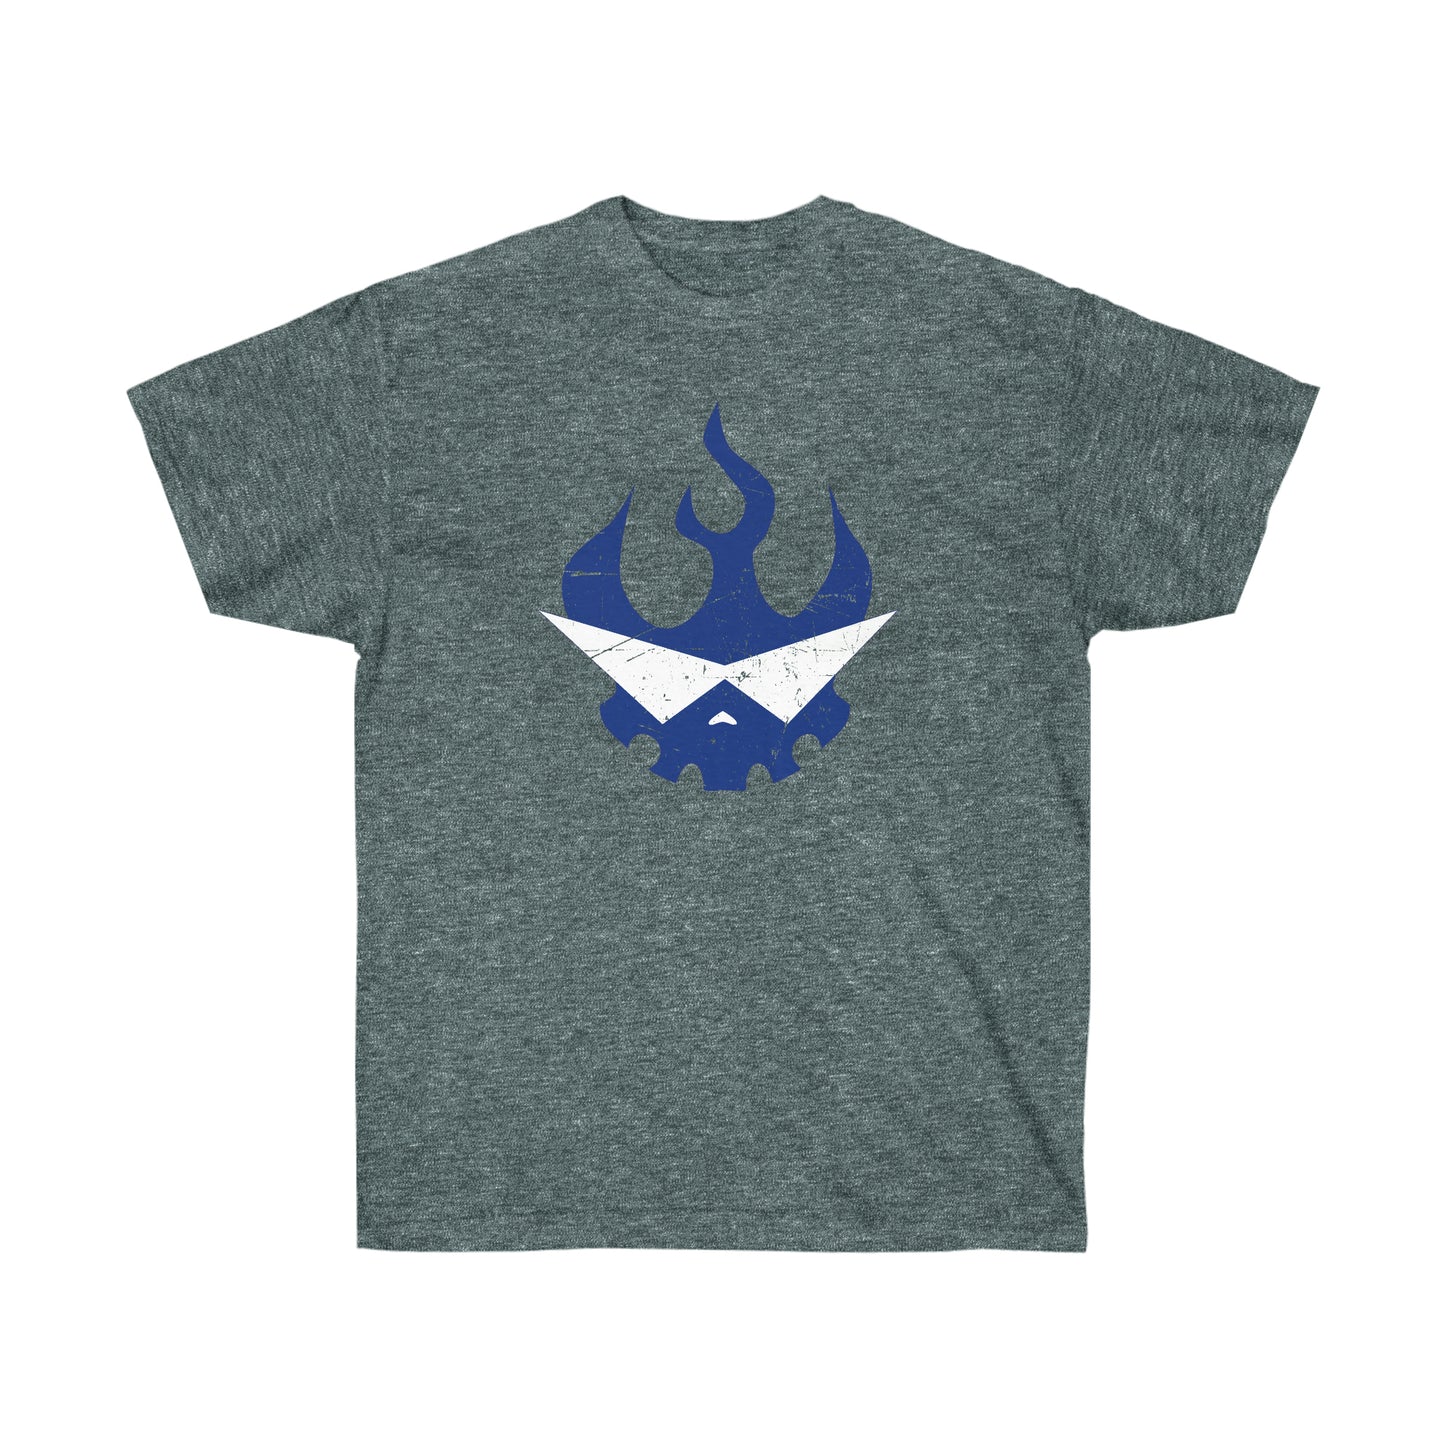 Gurrens Laganns shirt distressed logo typography Classic T-Shirt Vintage blue